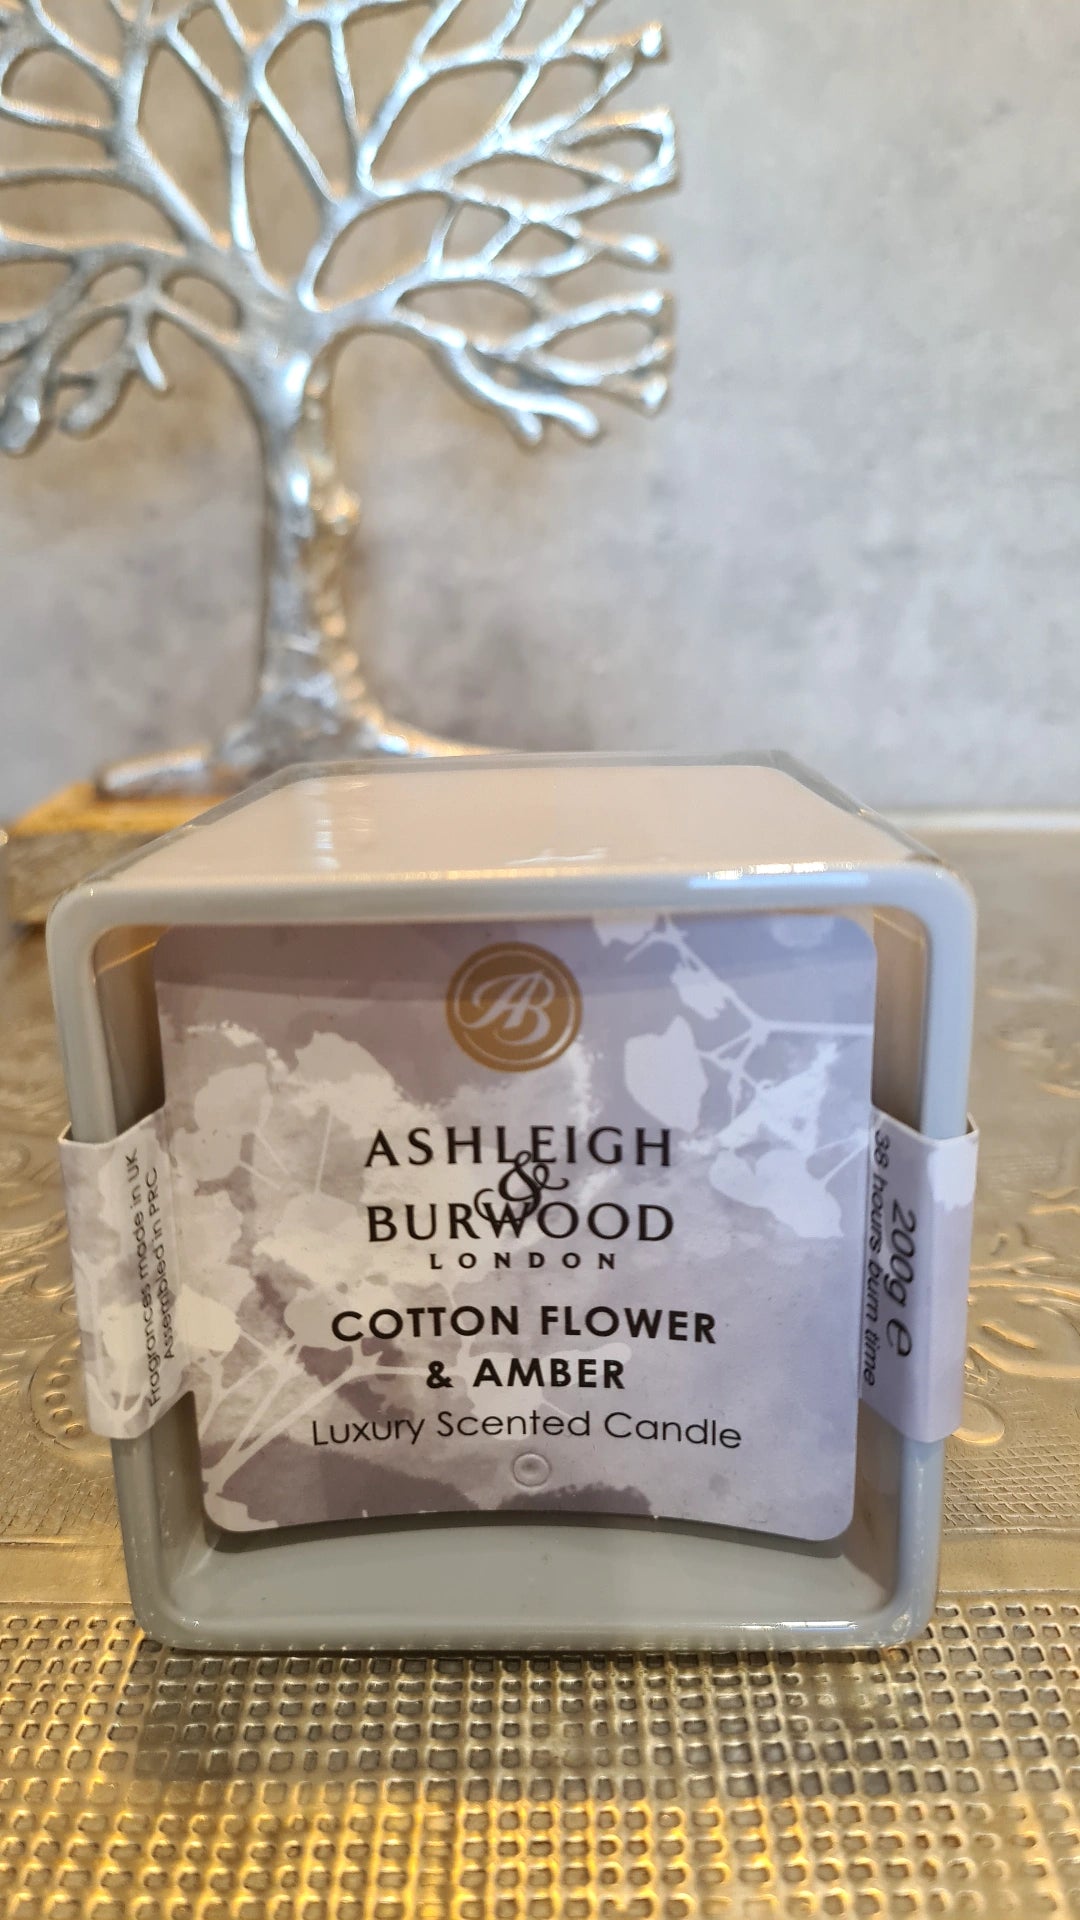 Duftkerze im Glas Ashleigh & Burwood London Cotton Flower & Amber Luxury Scented Candle